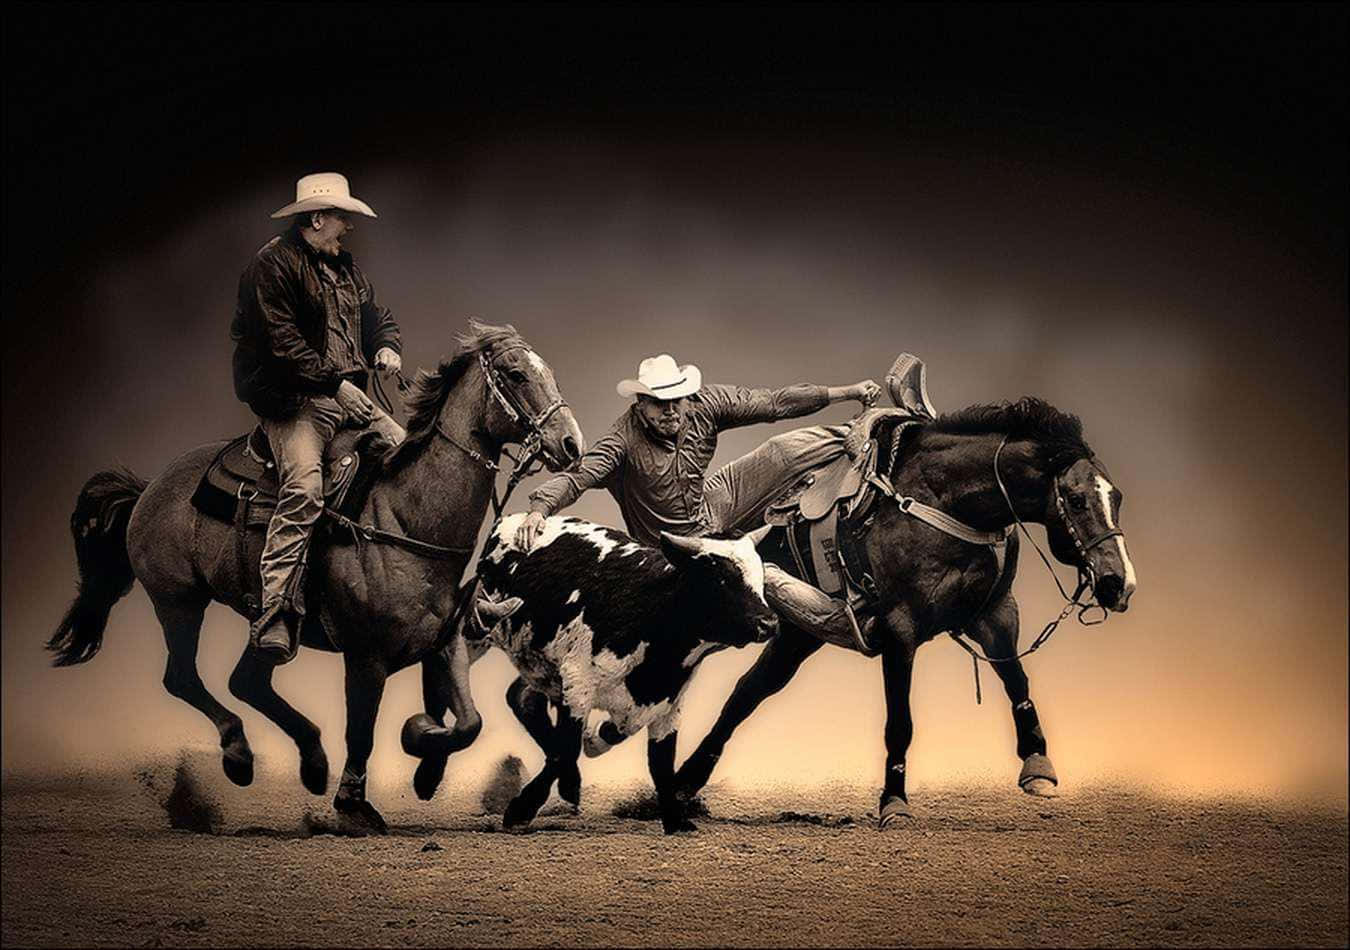 Rodeo cowboyer jagter en ko ved skumring. Wallpaper